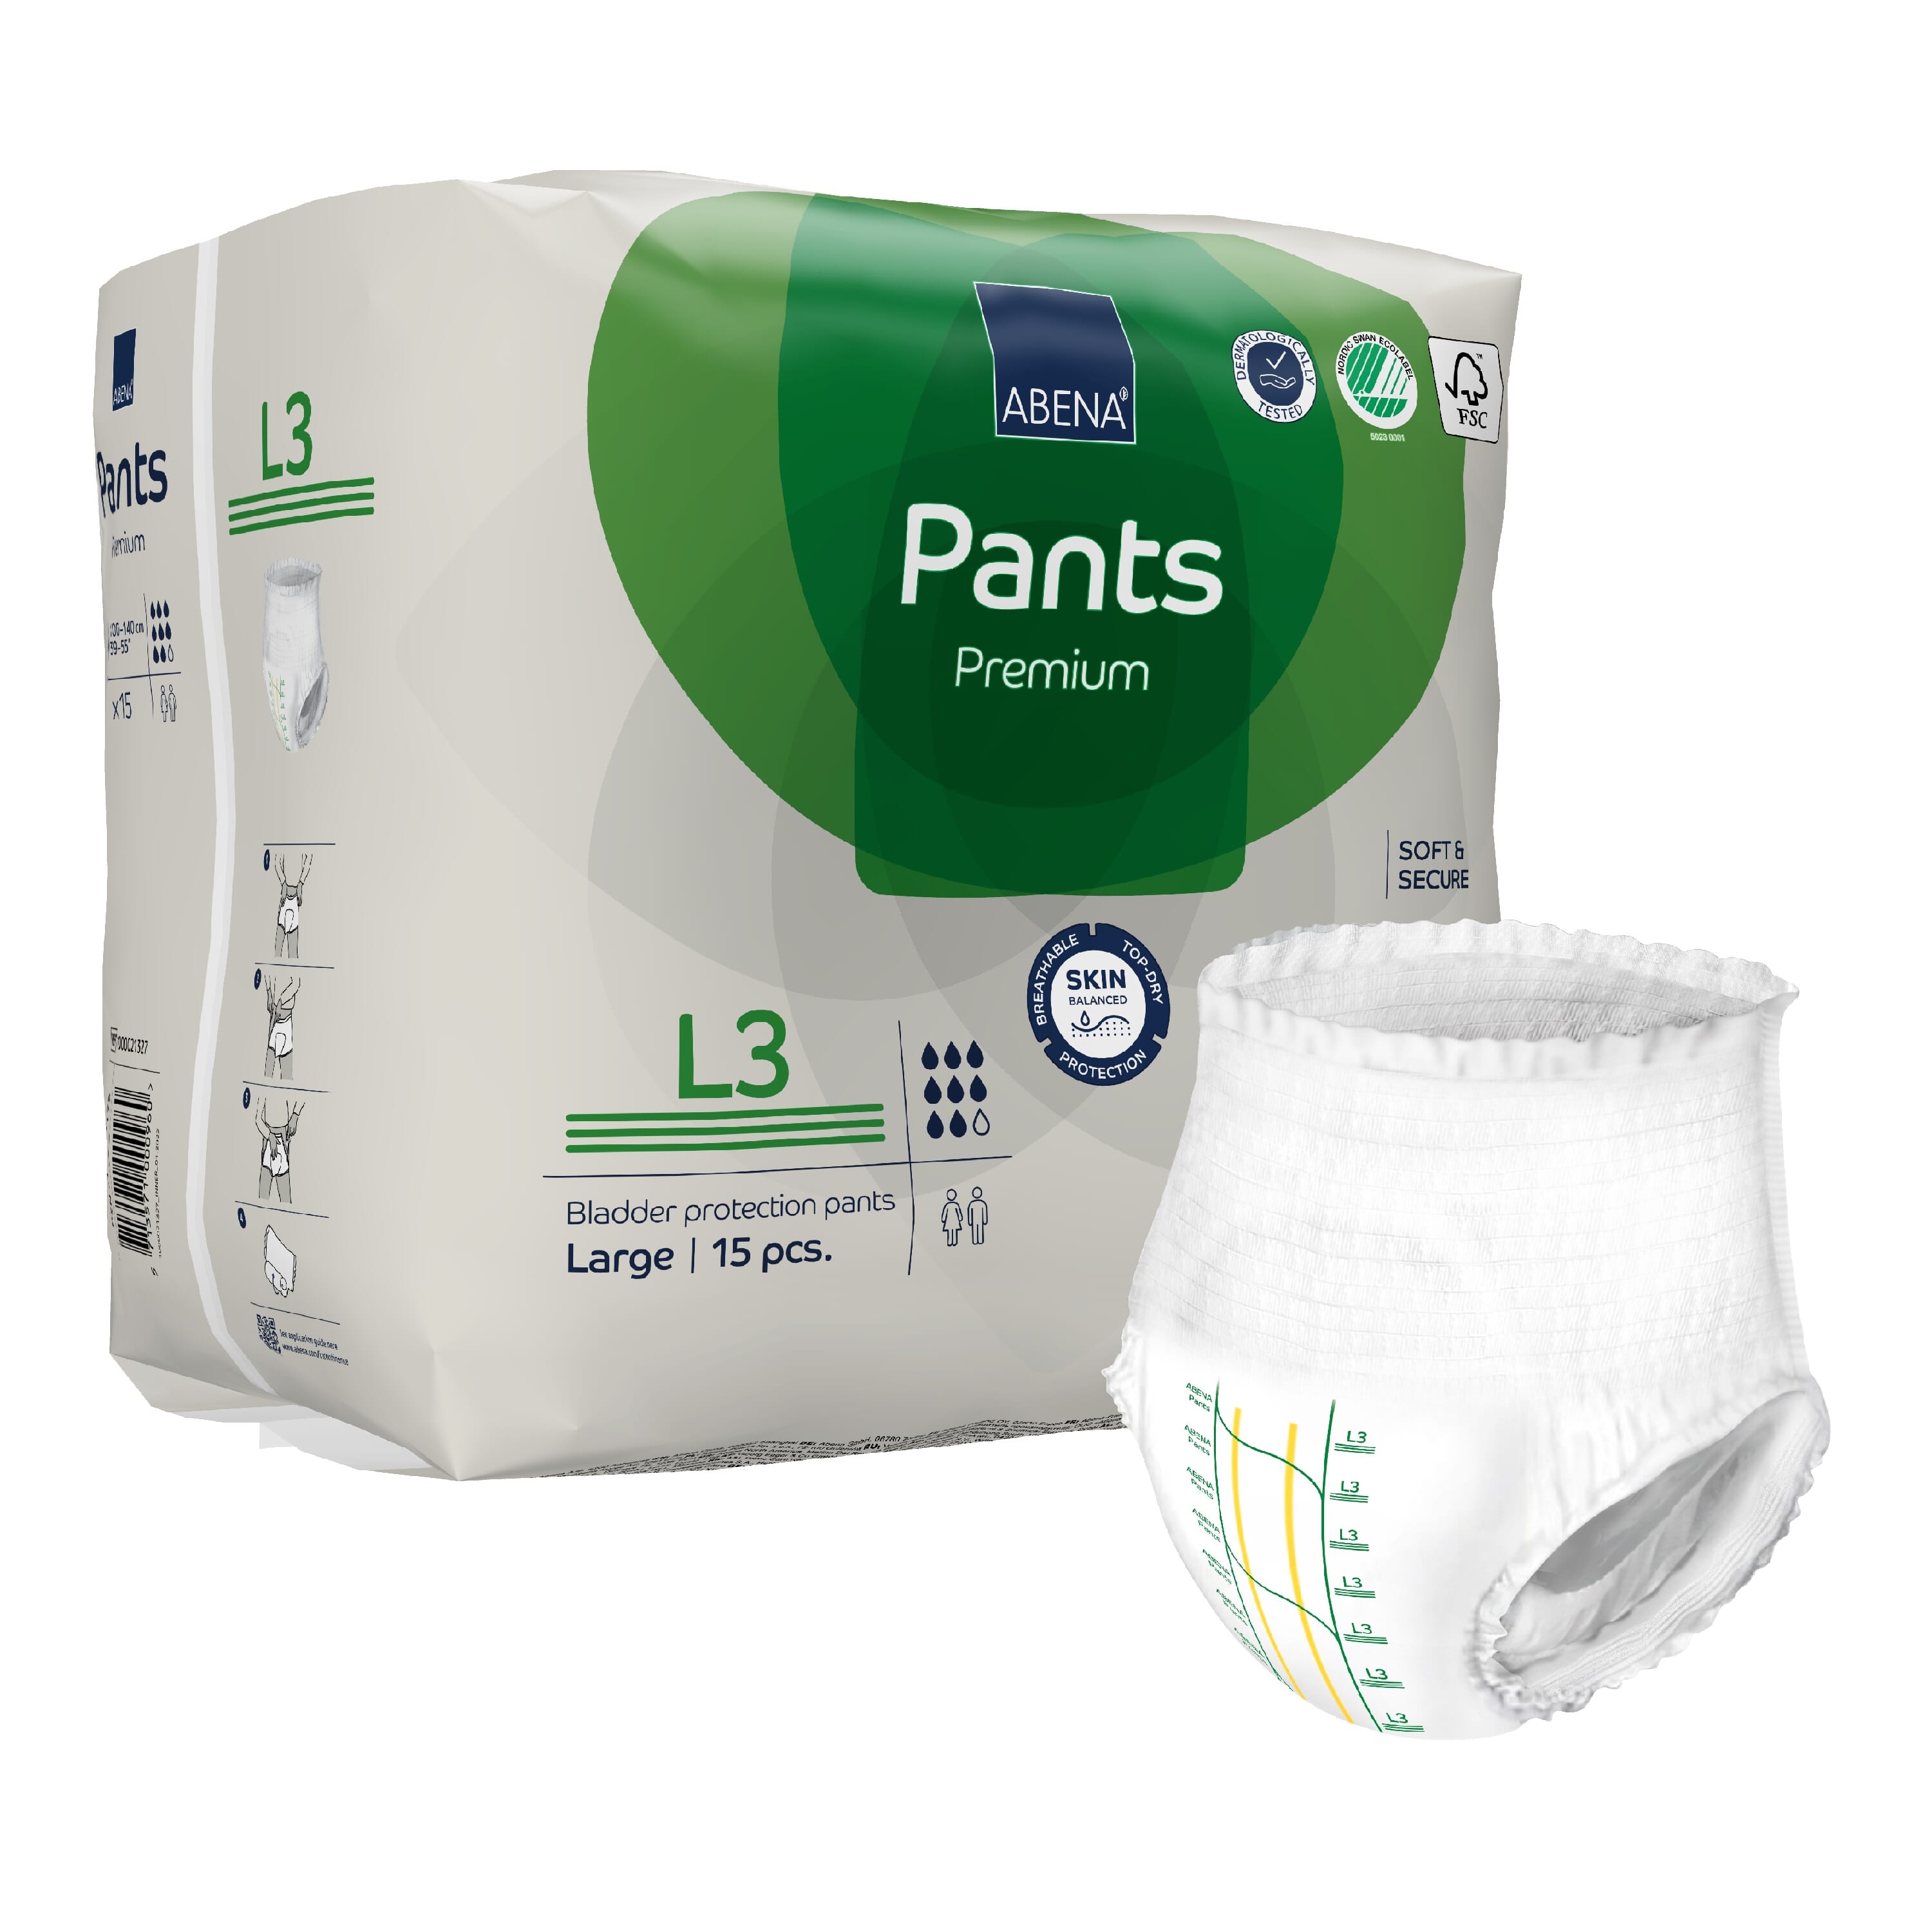 Image of Abena Pants Premium Incontinence Pants - L3